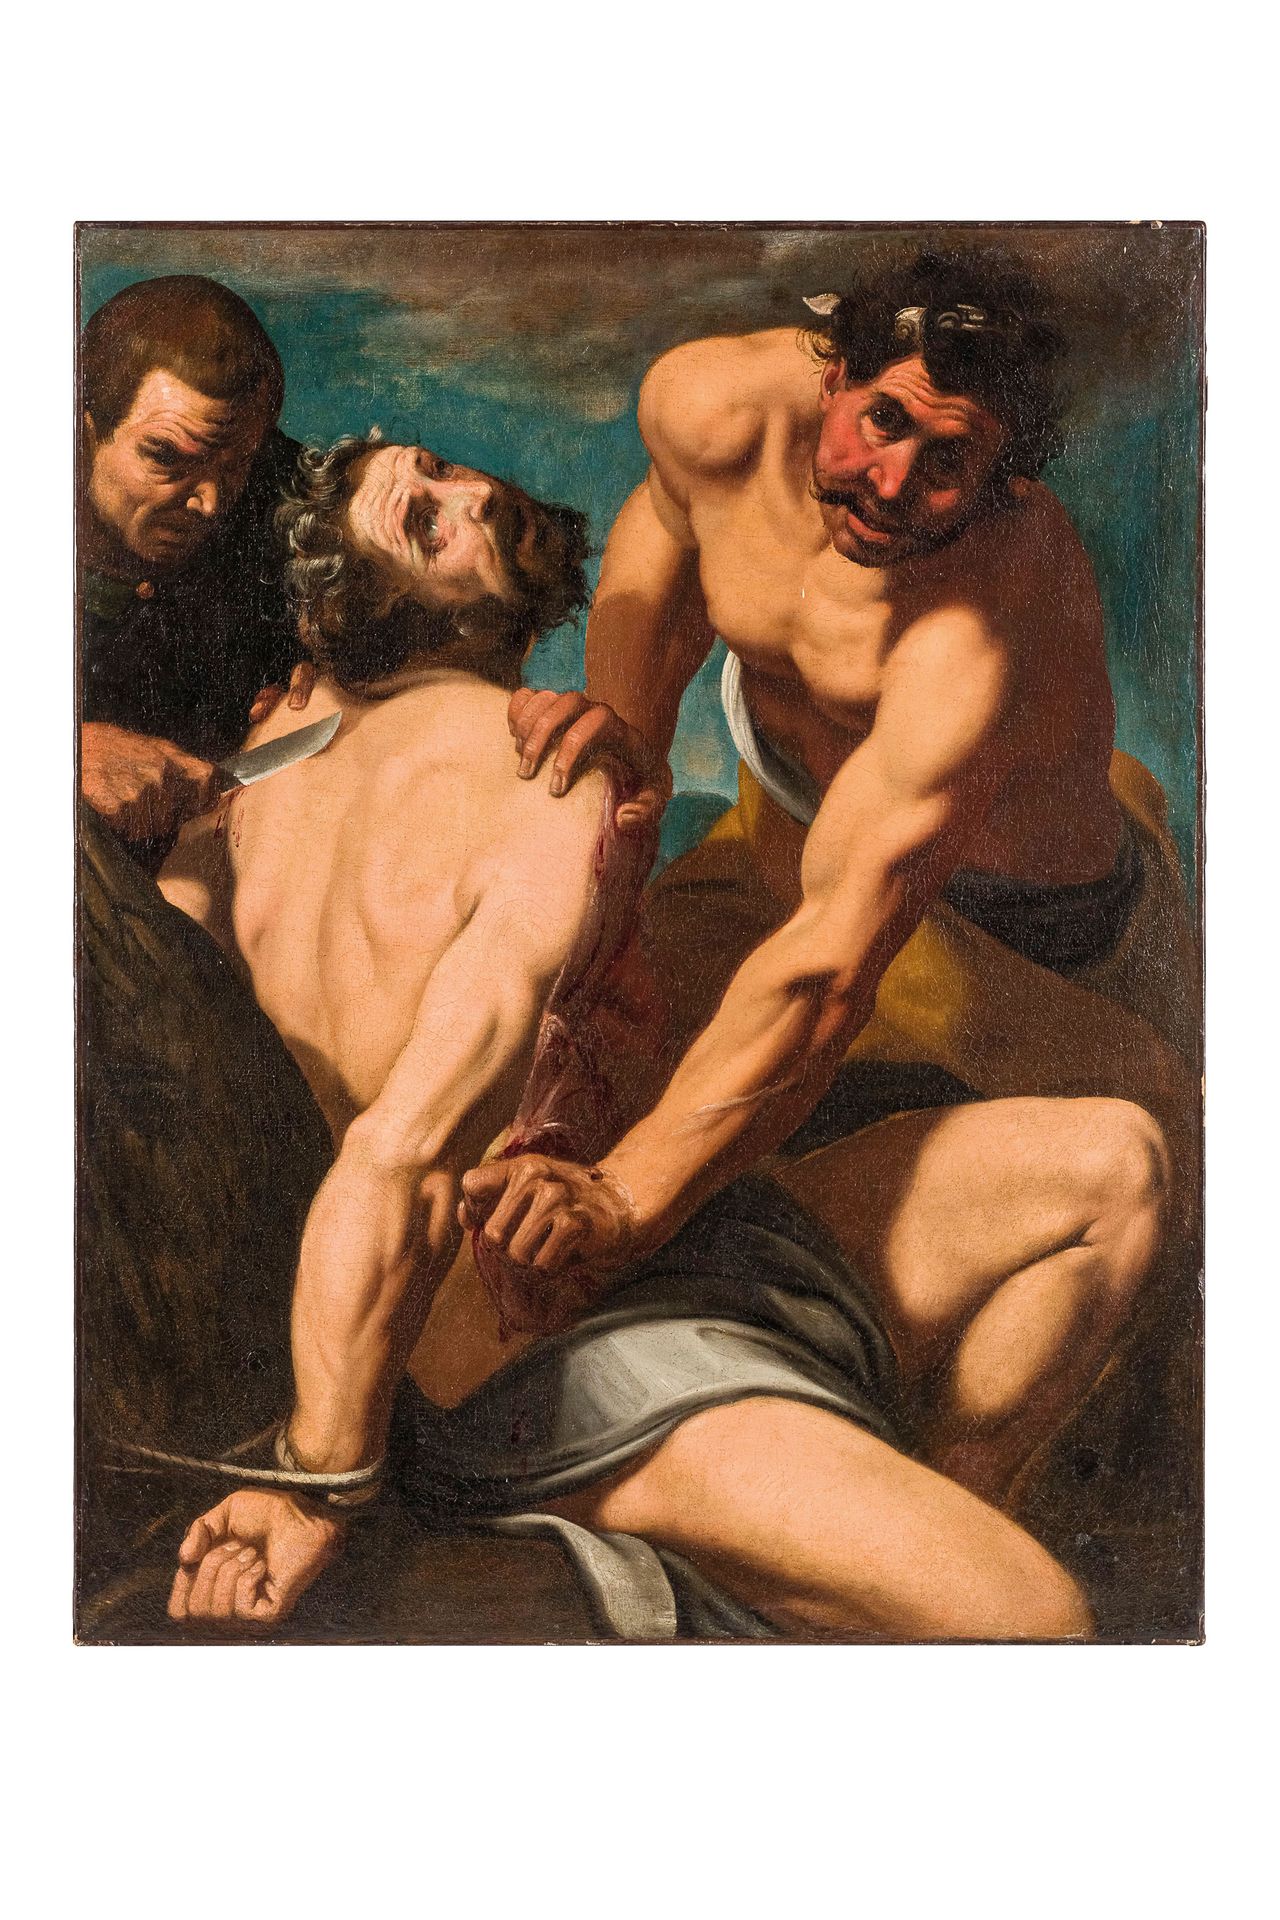 PITTORE DEL XVII SECOLO 圣巴托罗缪的殉难
布面油画，99X79厘米